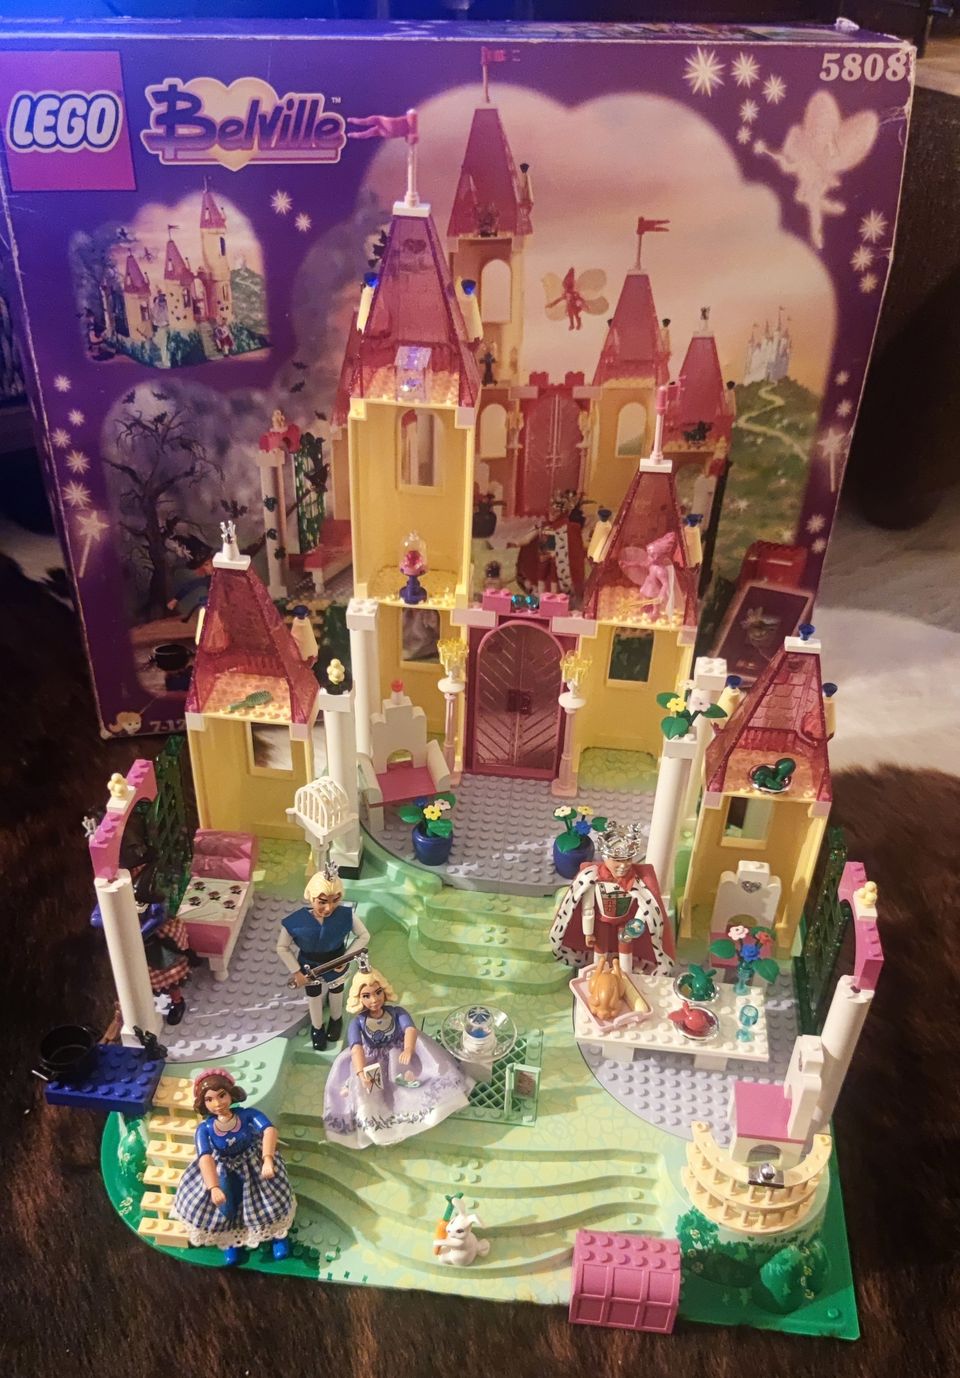 Lego prinsessalinna Belville